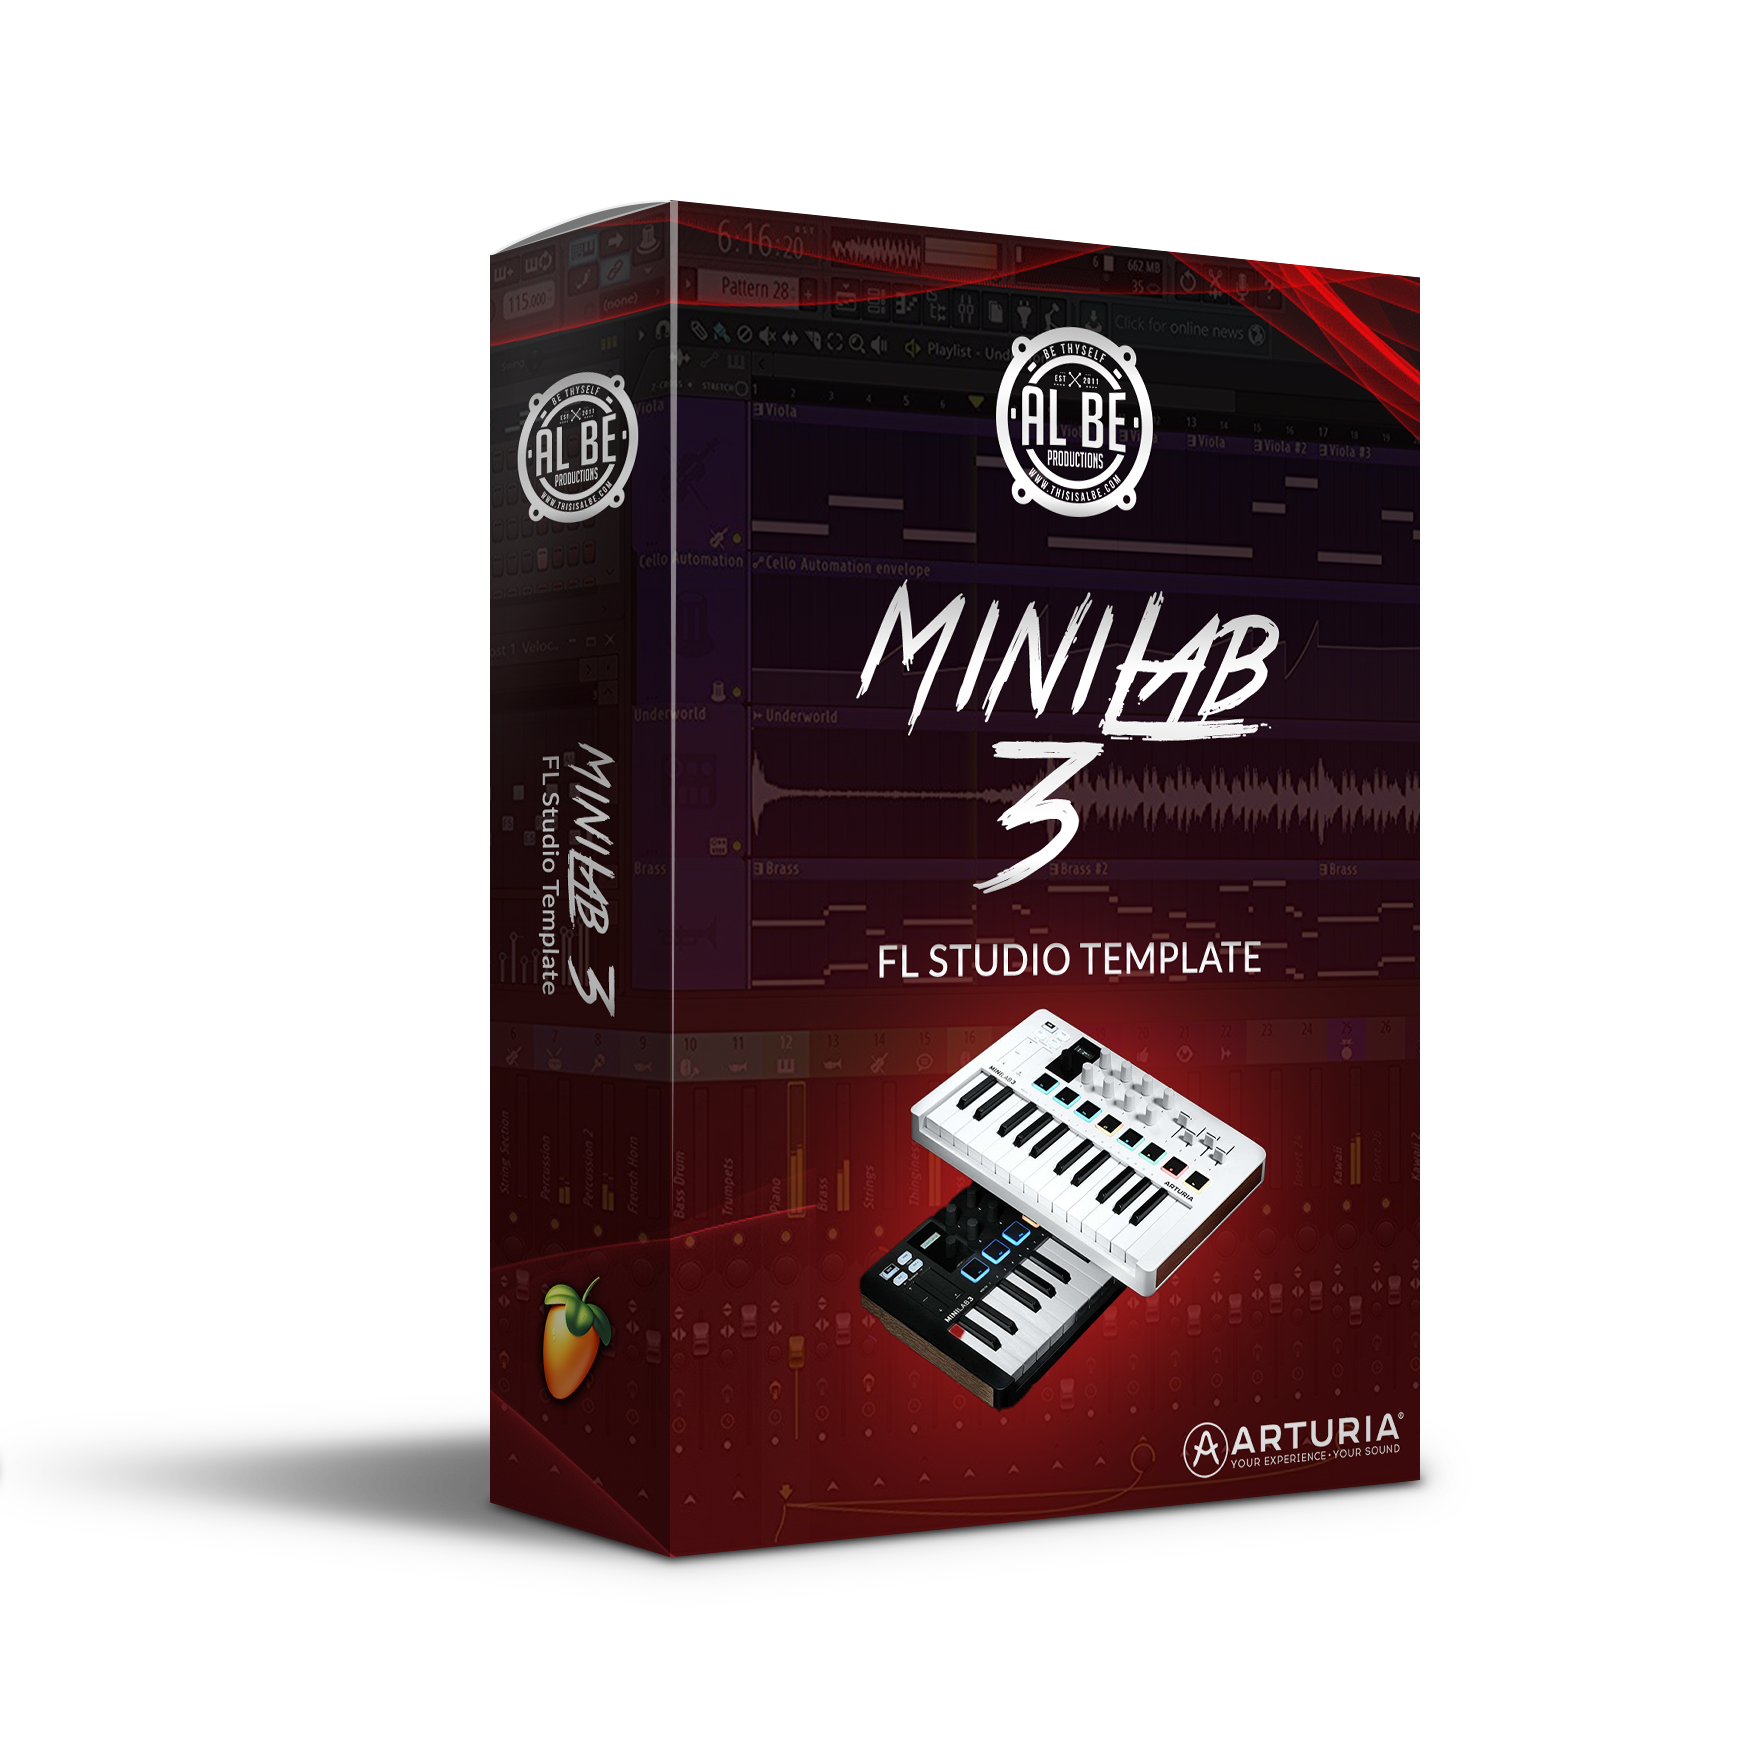 MiniLab 3 FL Studio Template – All Bangerz